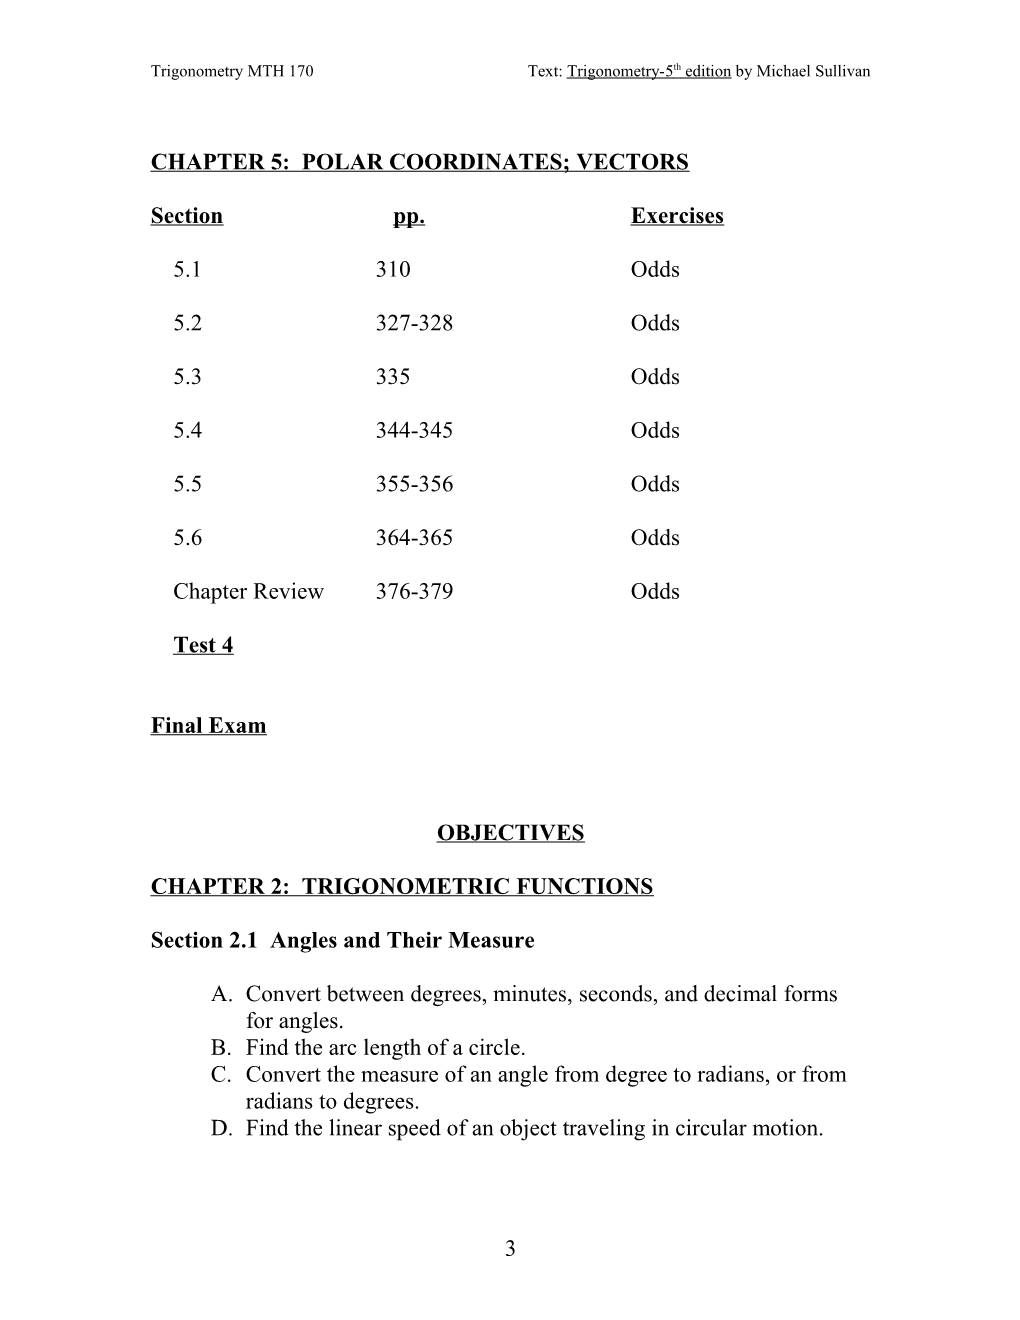 Trigonometry MTH 170Text: Trigonometry-5Th Edition by Michael Sullivan